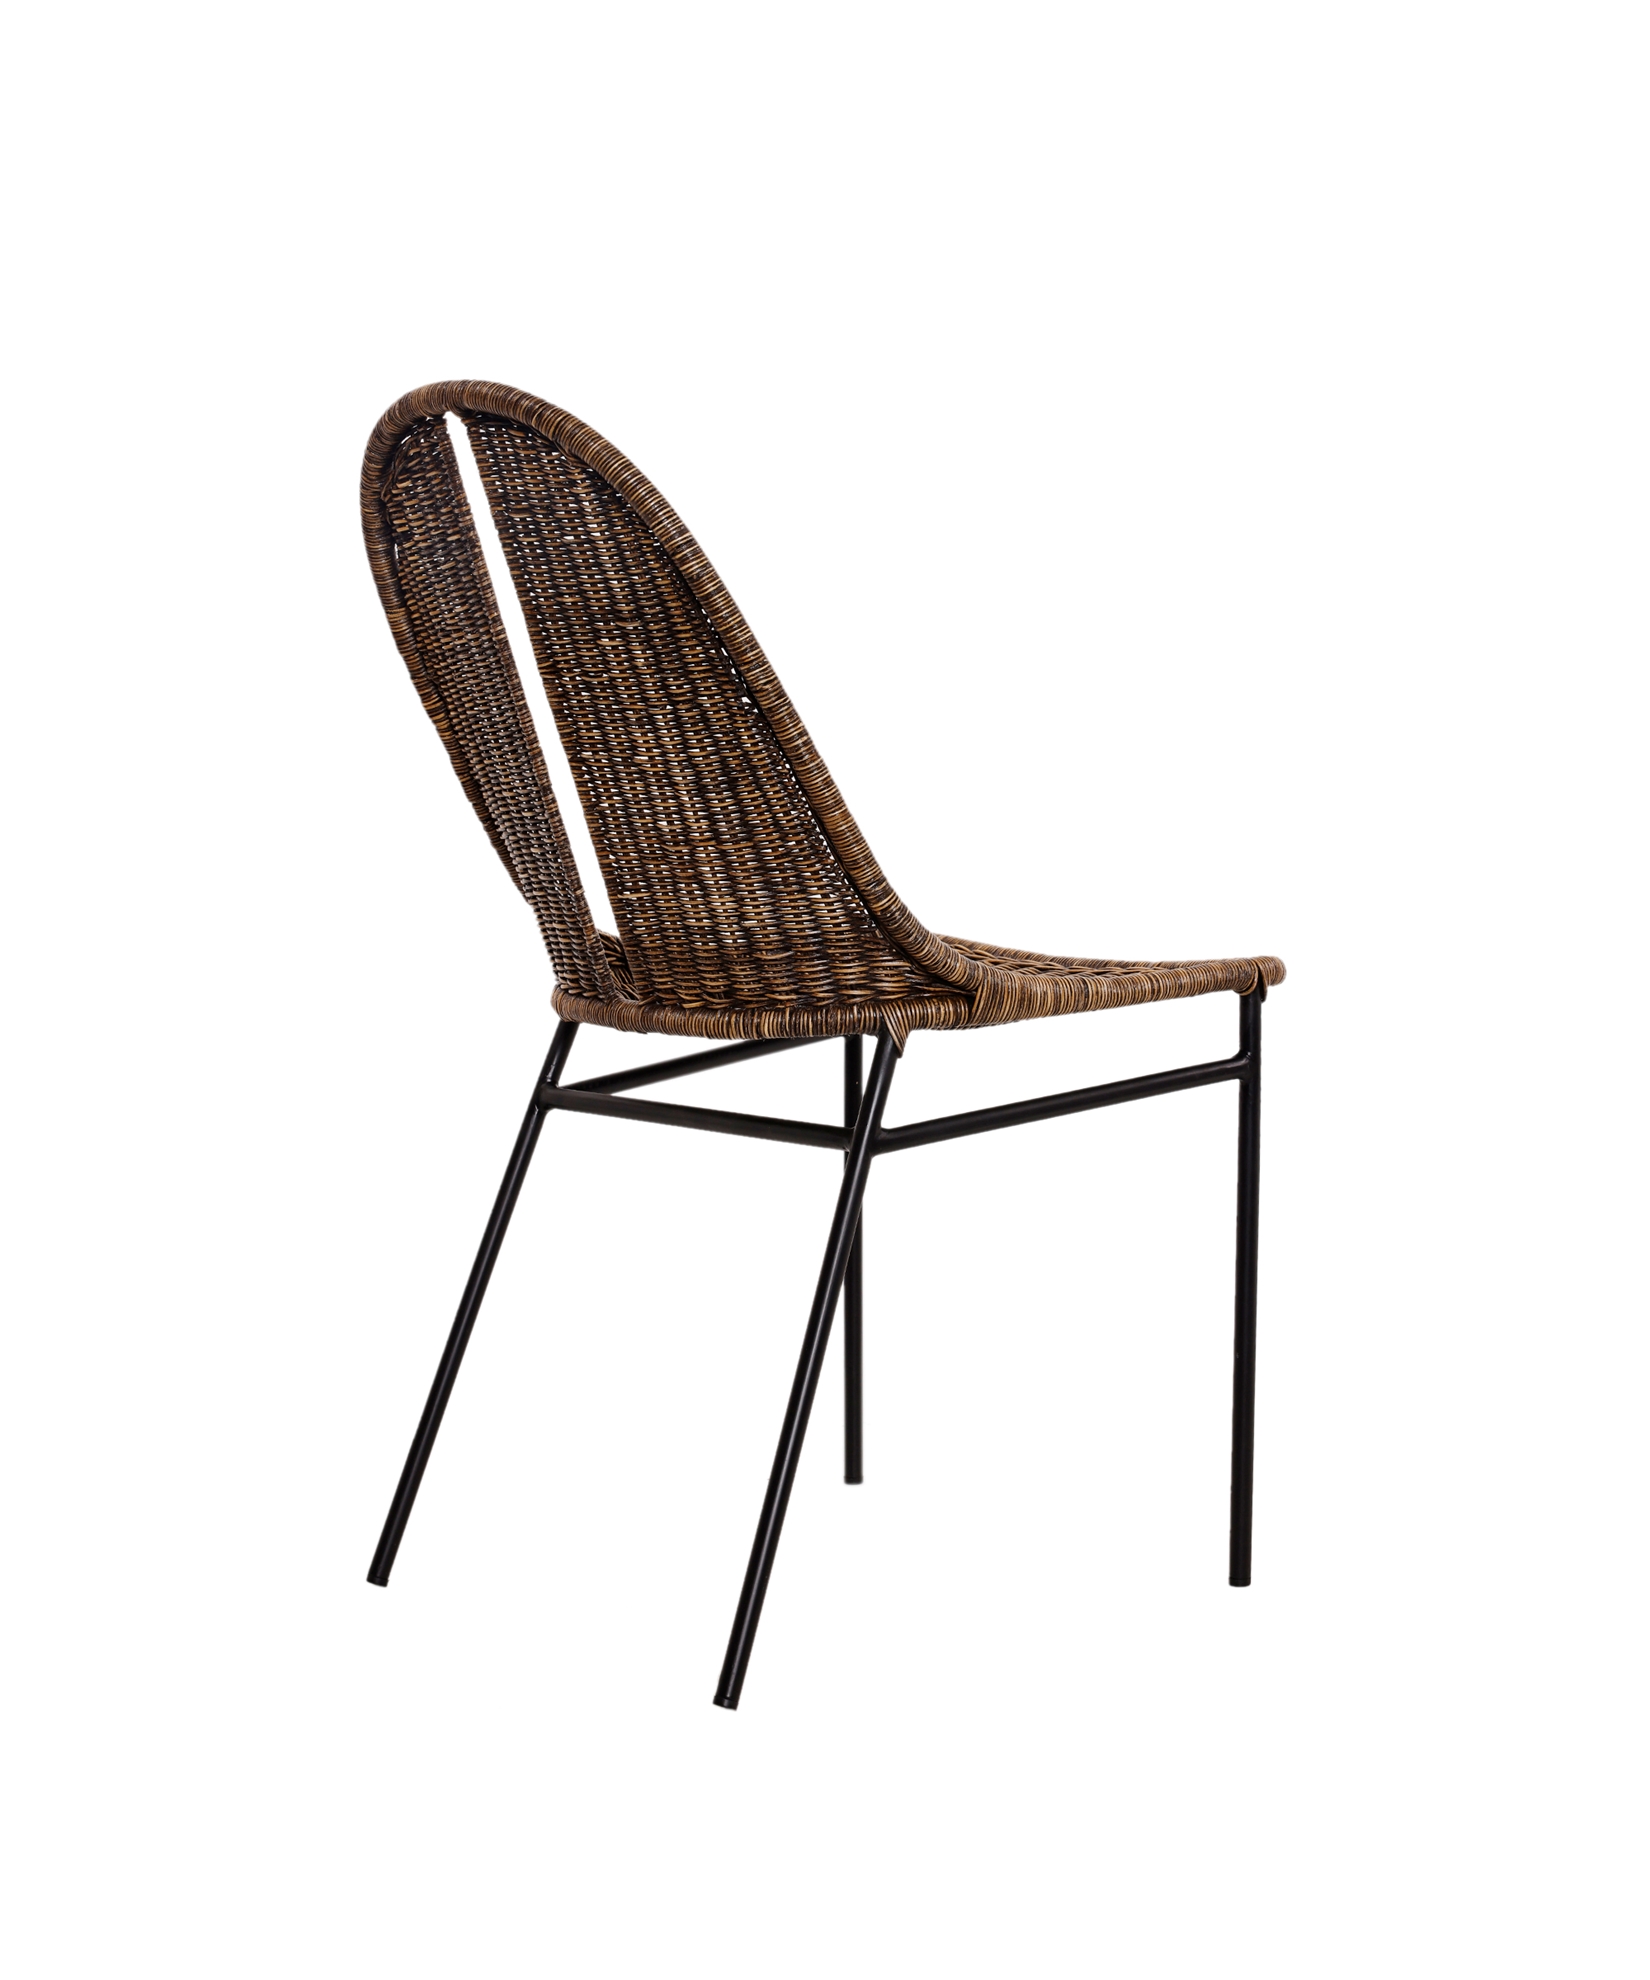 Sandalye - Bahçe (47x56x87cm)